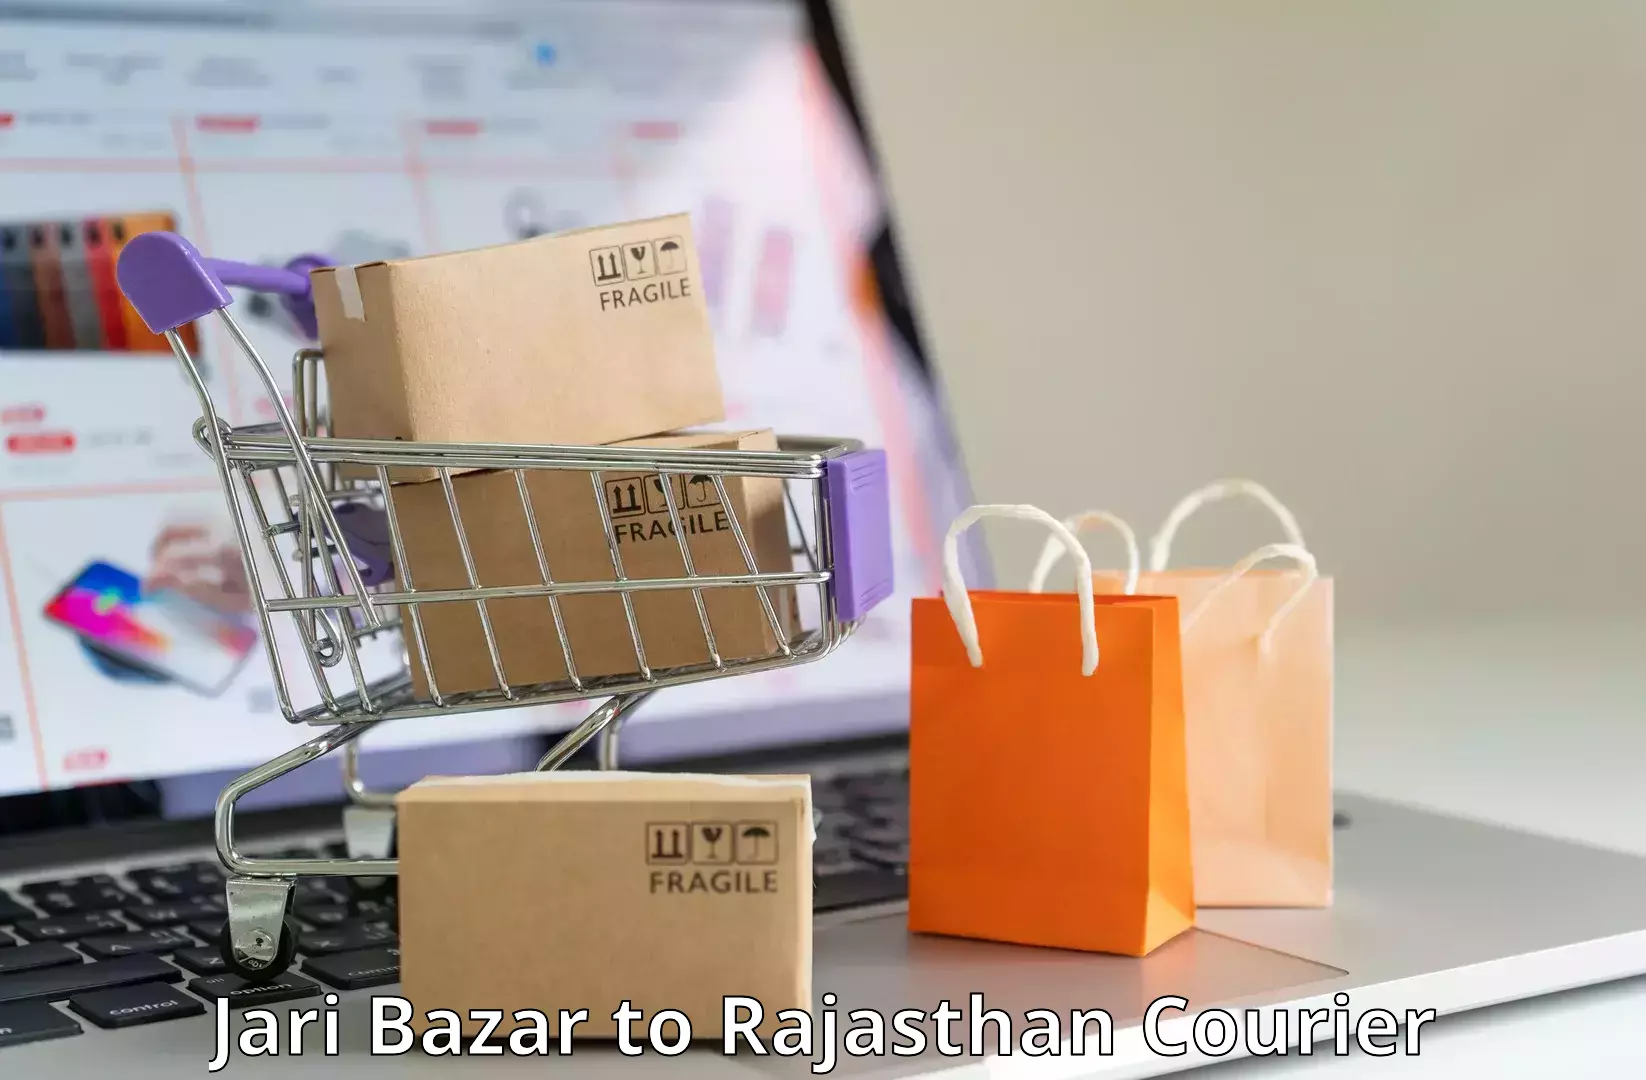 State-of-the-art courier technology Jari Bazar to Sri Vijaynagar